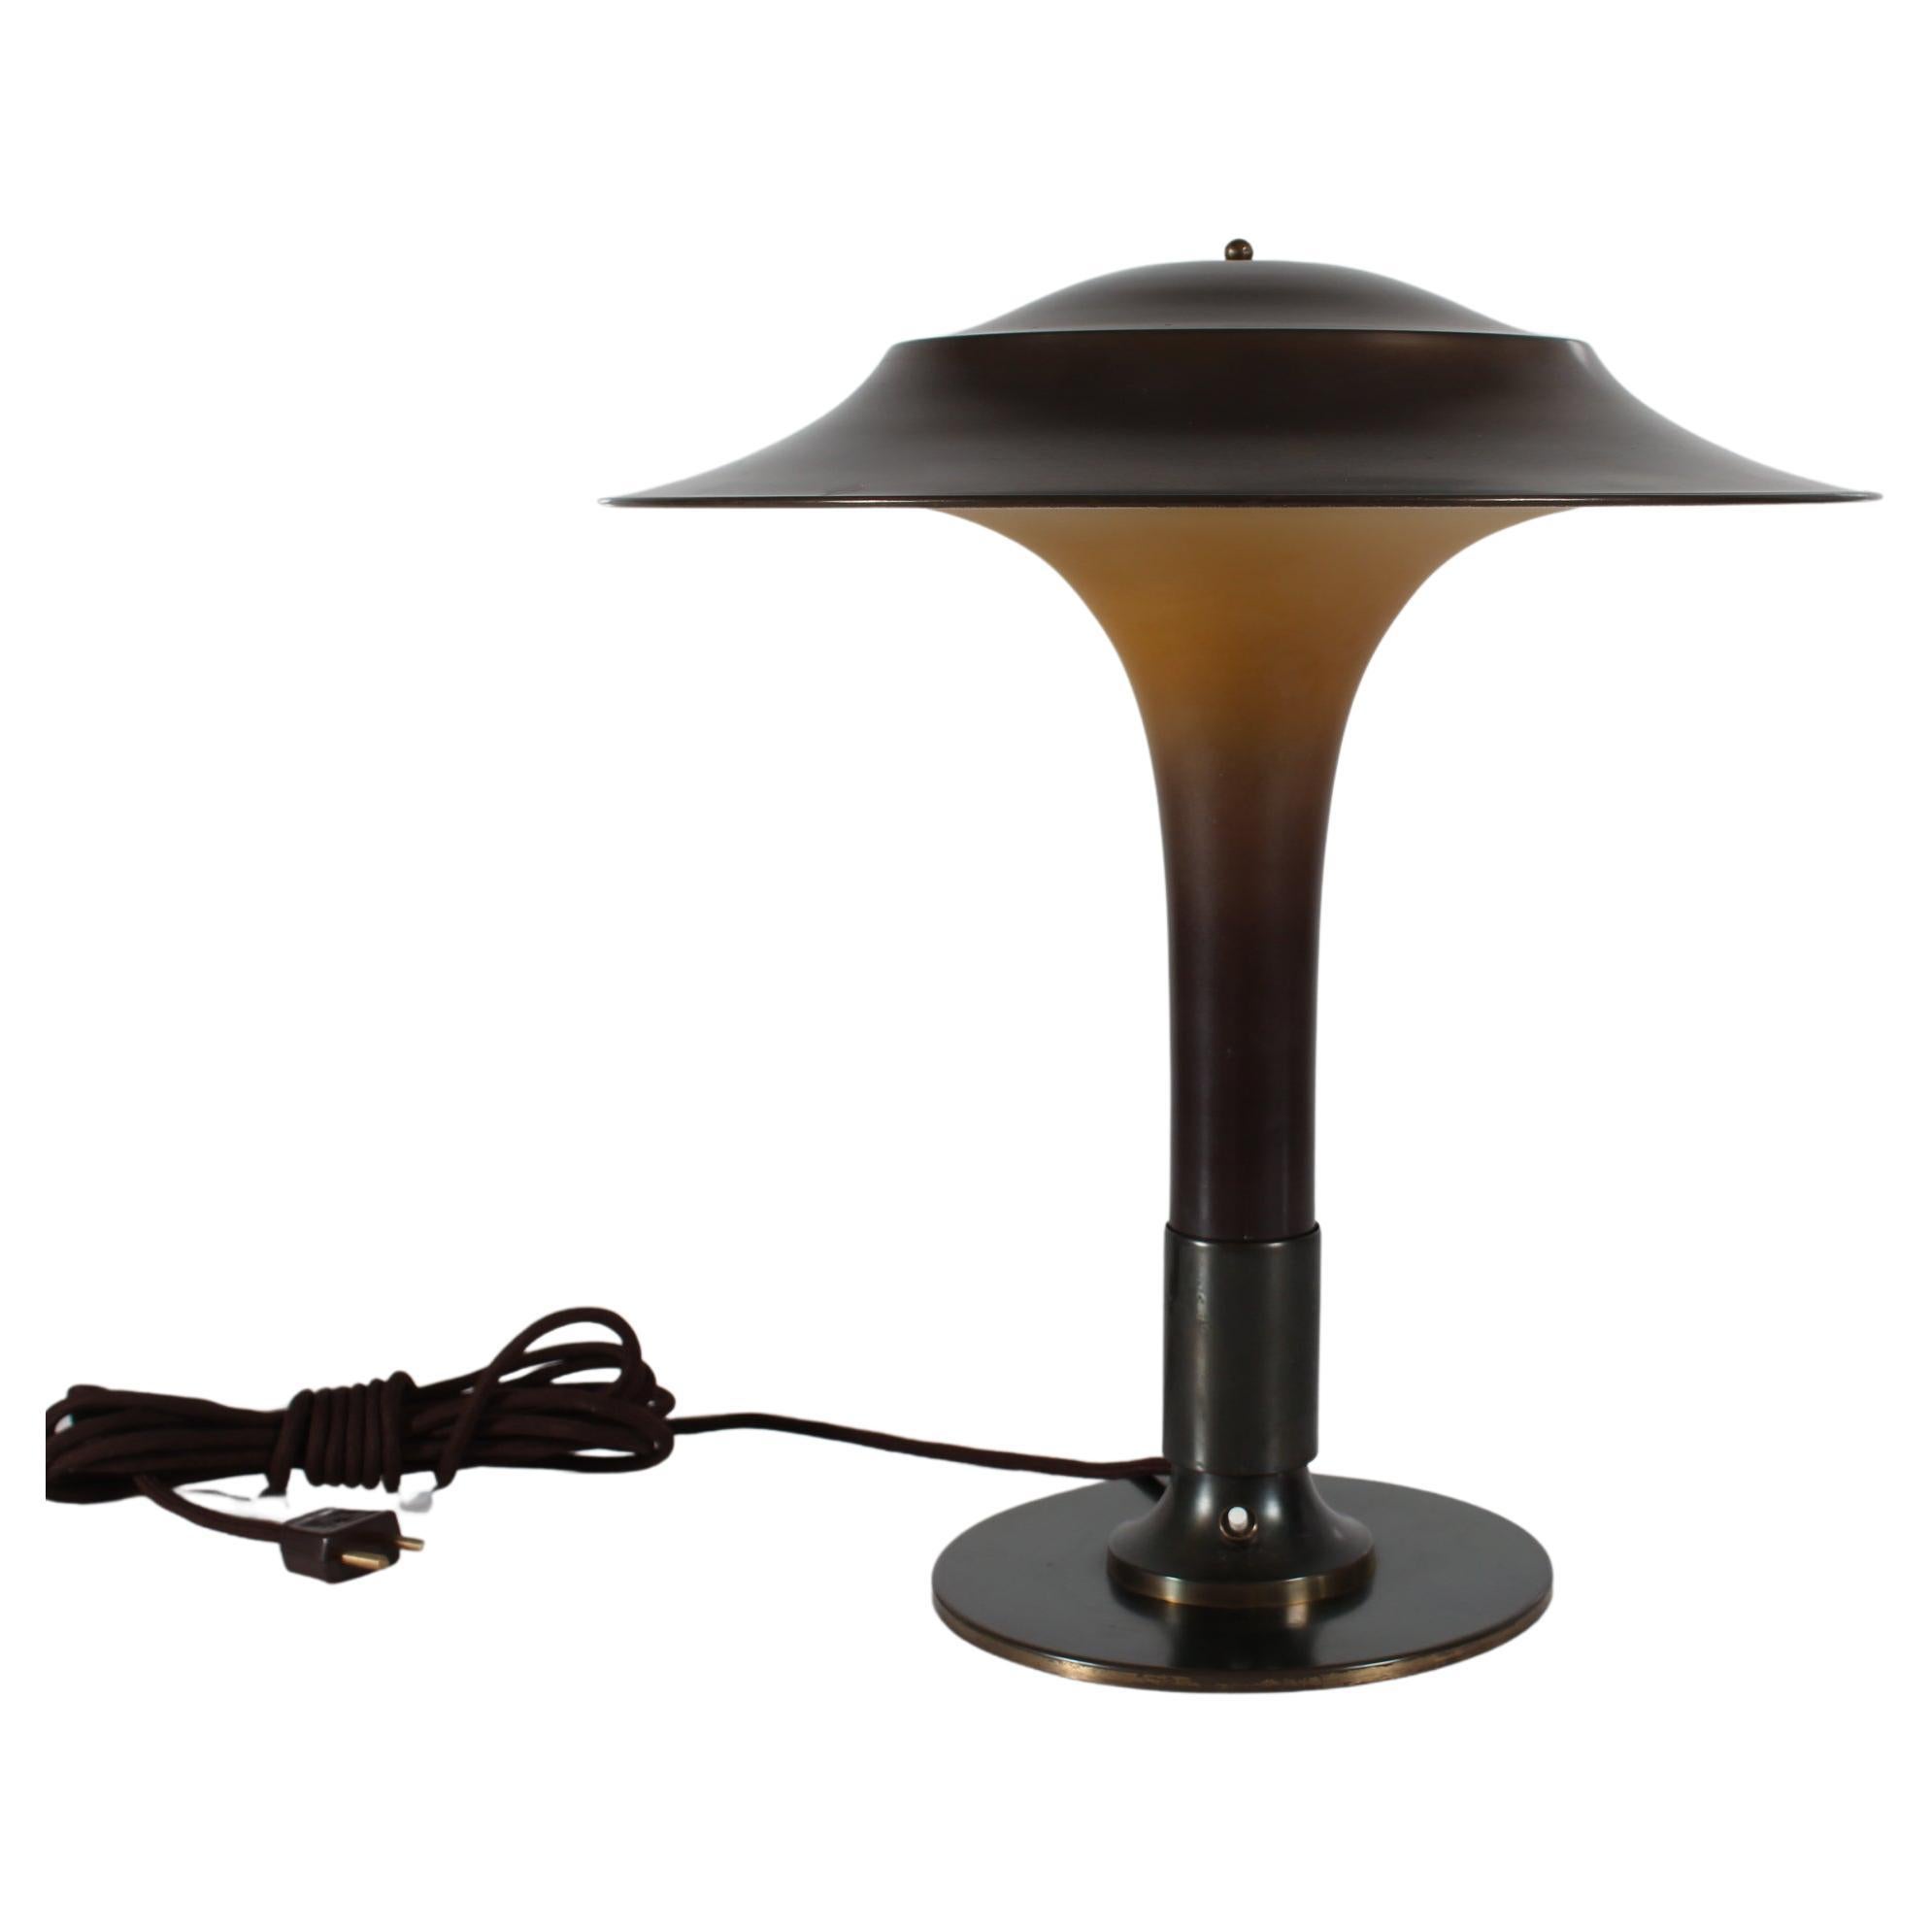 RARE Danish Art Deco table lamp called 